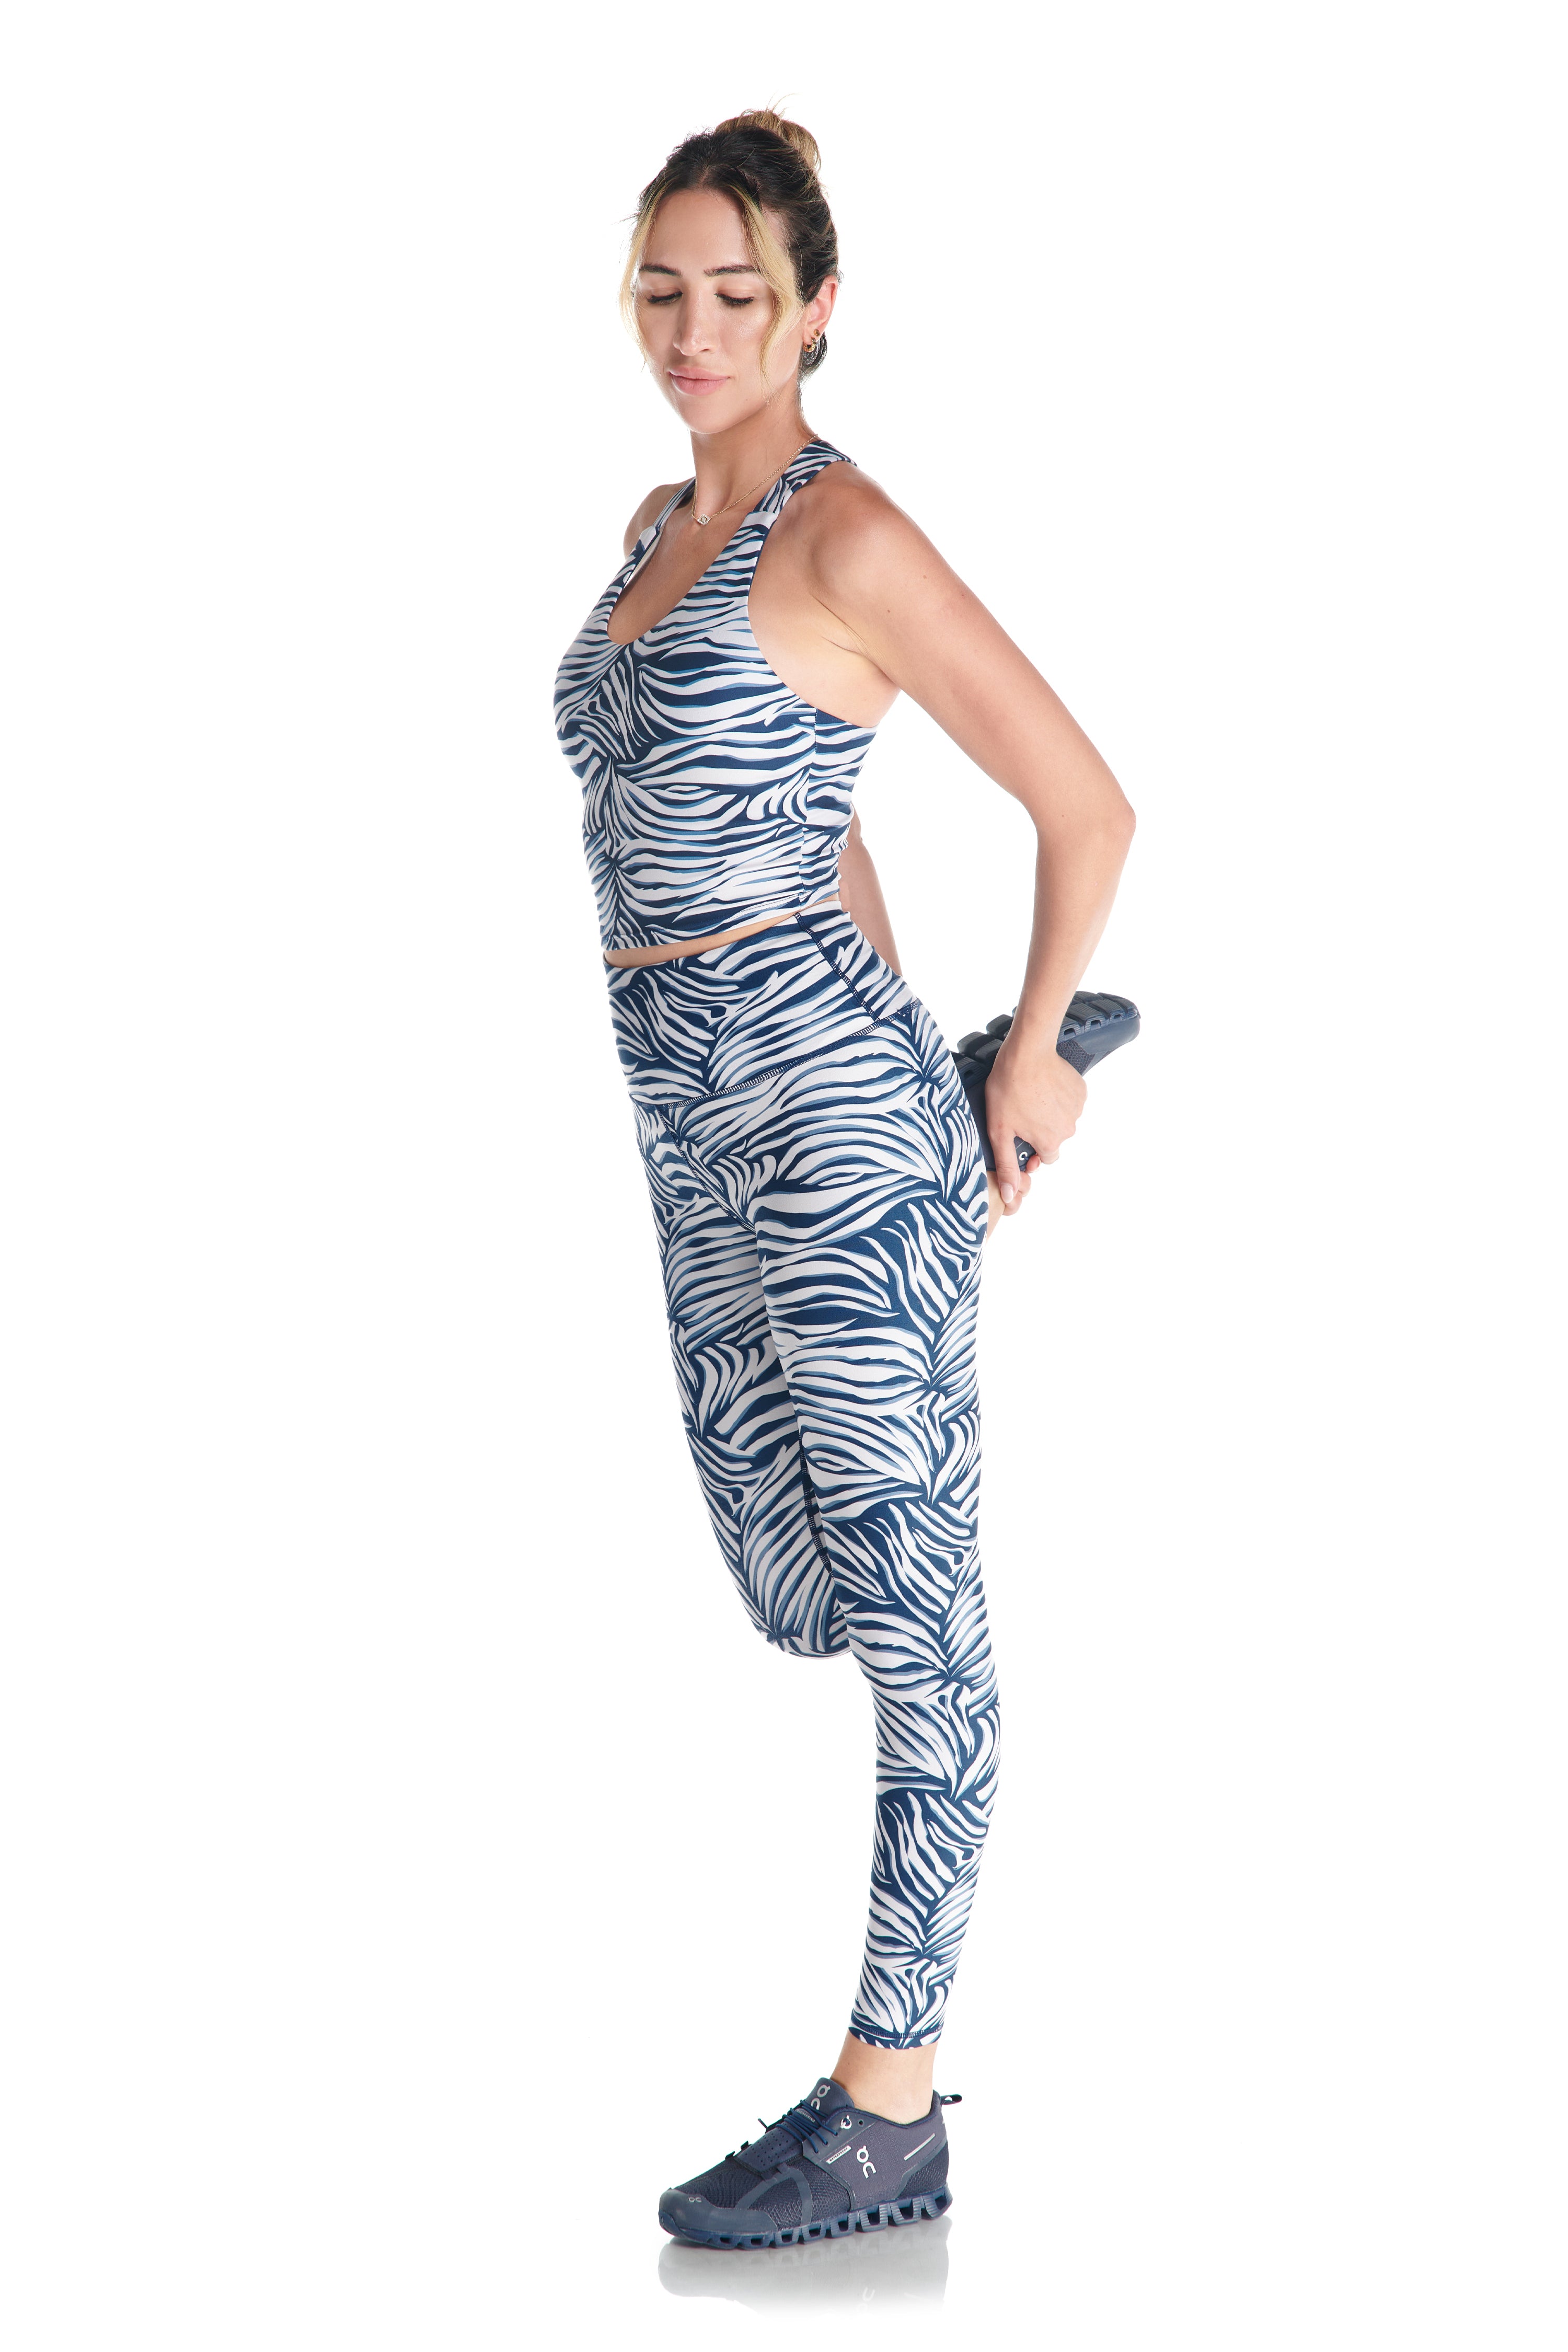 Kyodan Mineral High waist soft jacquard marble leggings xs - $30